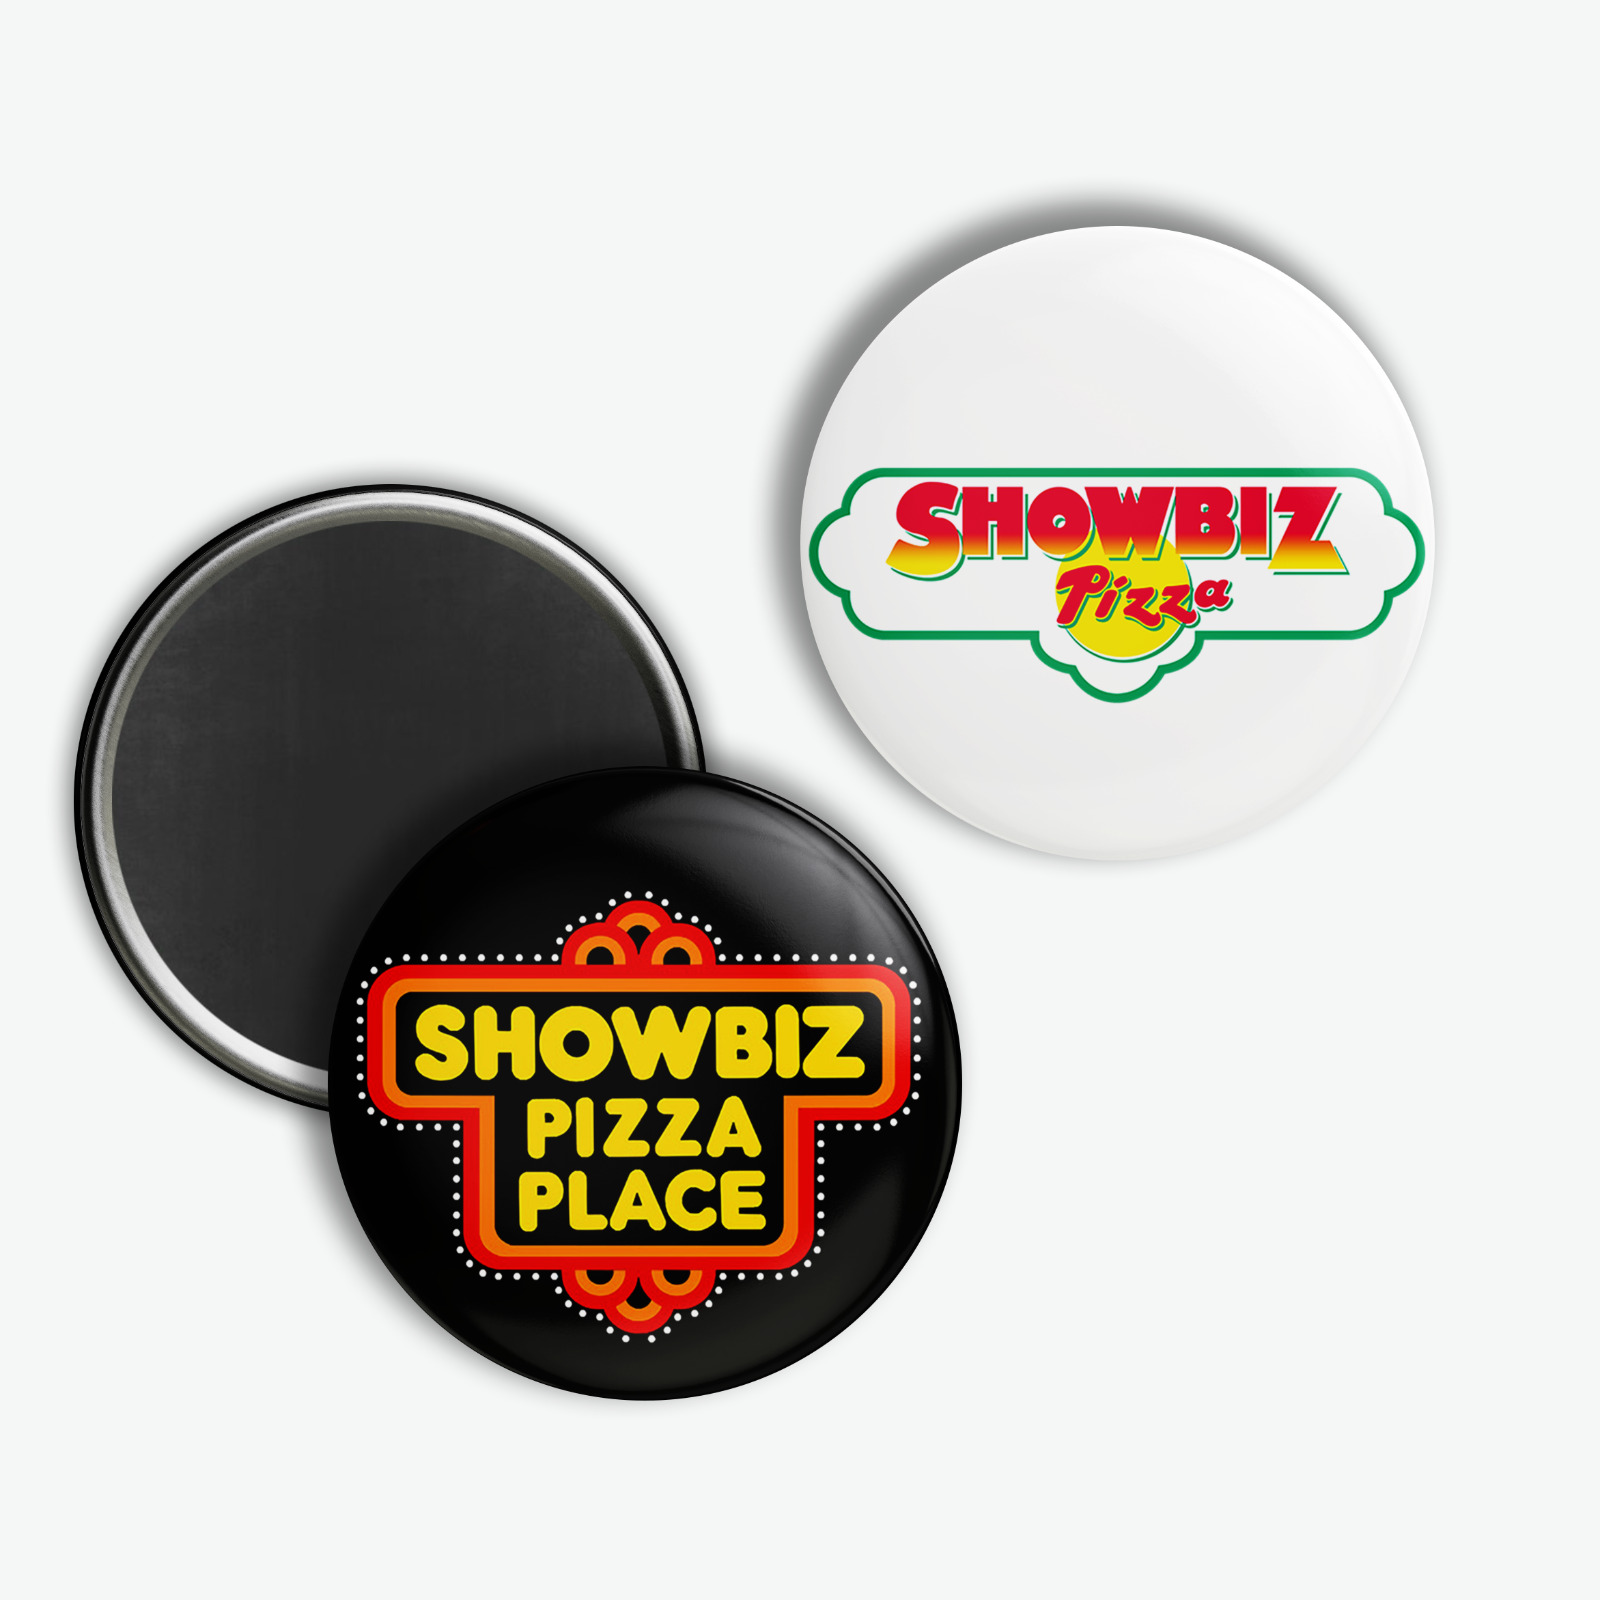 Showbiz Pizza 2.25 inch MAGNETS Retro Throwback Gift Chuck E Cheese 1980s/1990s